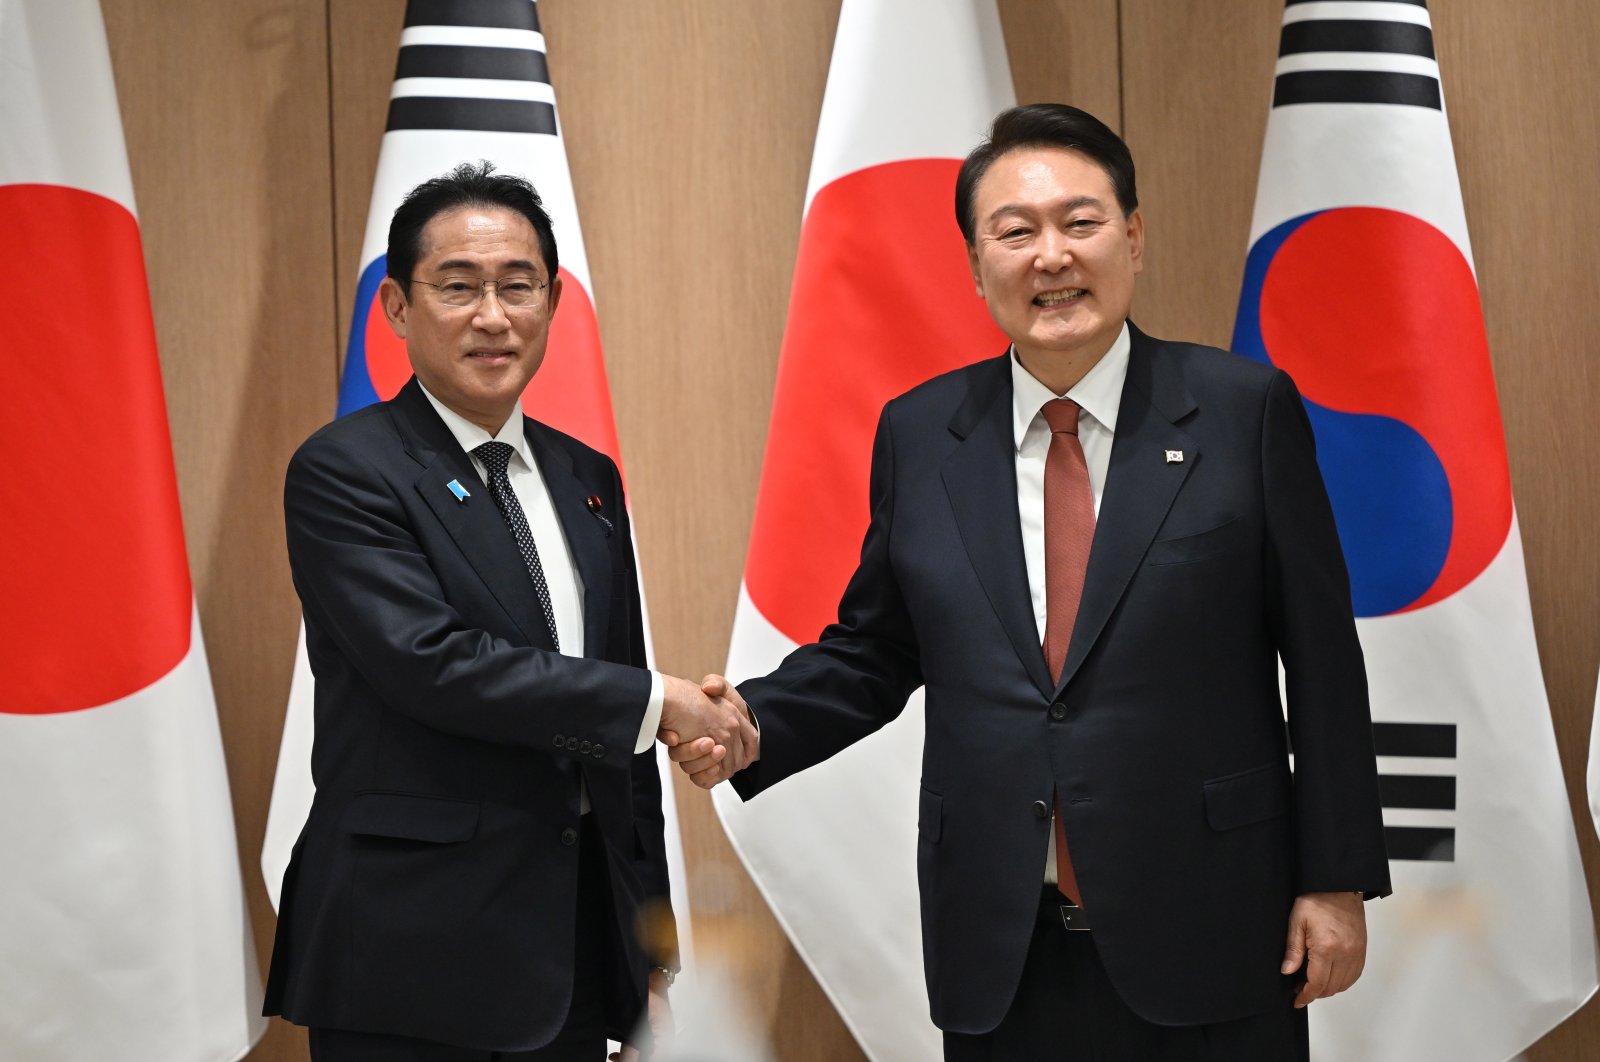 South Korean President Yoon Suk Yeol (R) shakes hands with Japanese Prime Minister Fumio Kishida during their meeting in Seoul, South Korea, May 7, 2023. (EPA Photo)